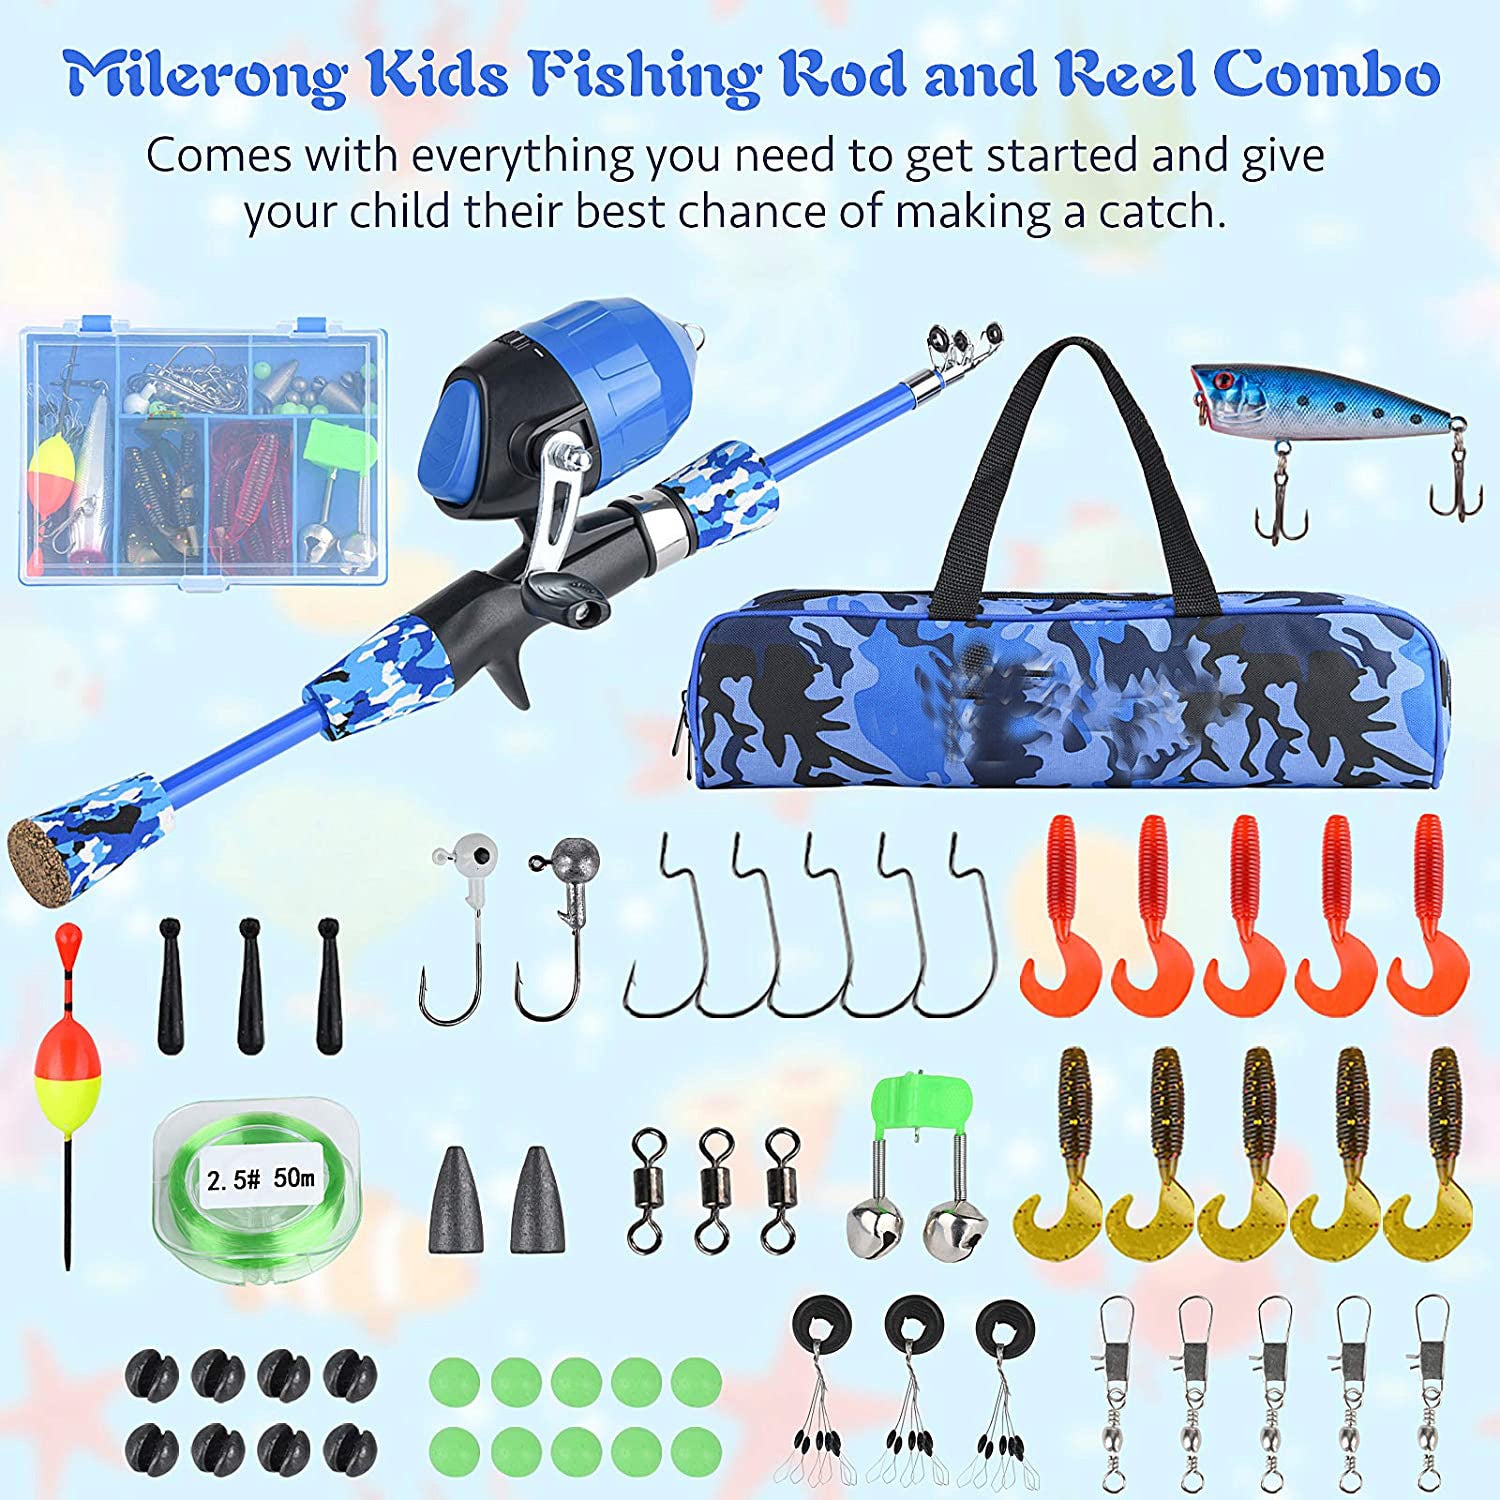 Children And Teenagers Outdoor Fishing Equipment Set